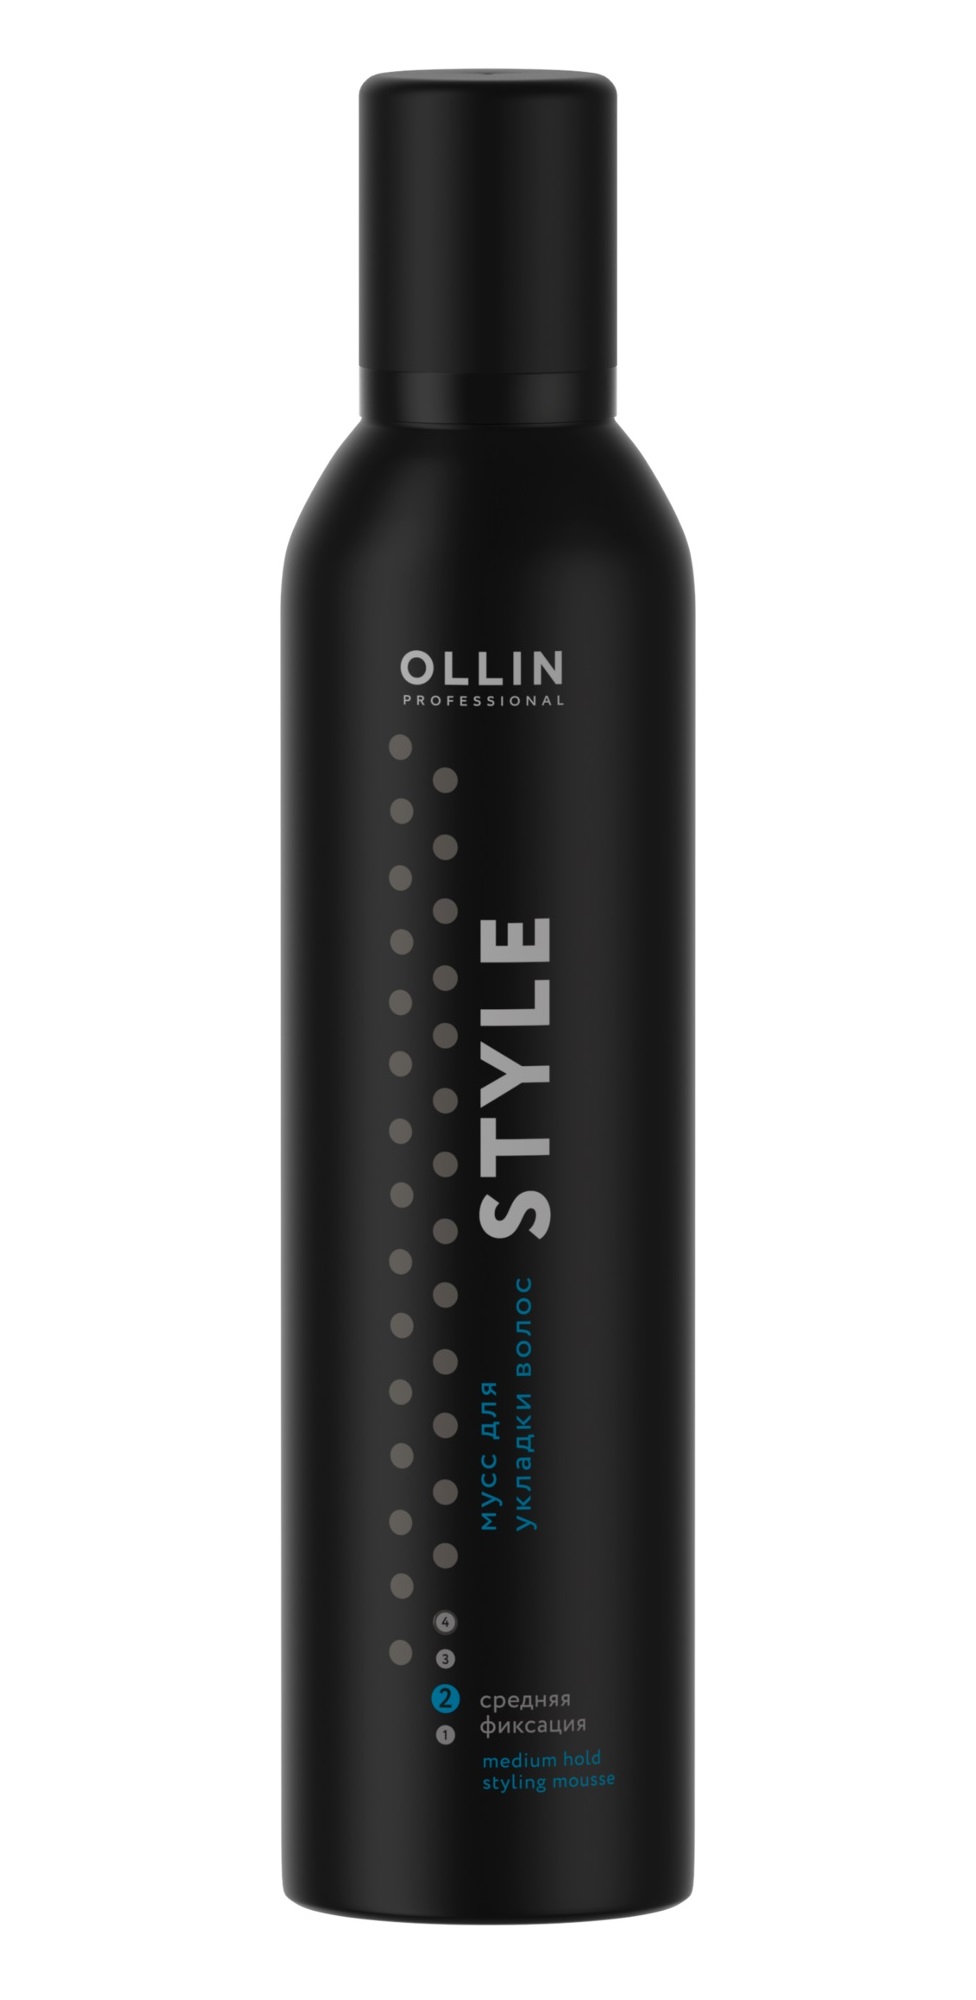 Ollin Professional Мусс для укладки волос средней фиксации, 250 мл (Ollin Professional, Style) ollin professional мусс style medium hold средней фиксации 250 мл 285 г